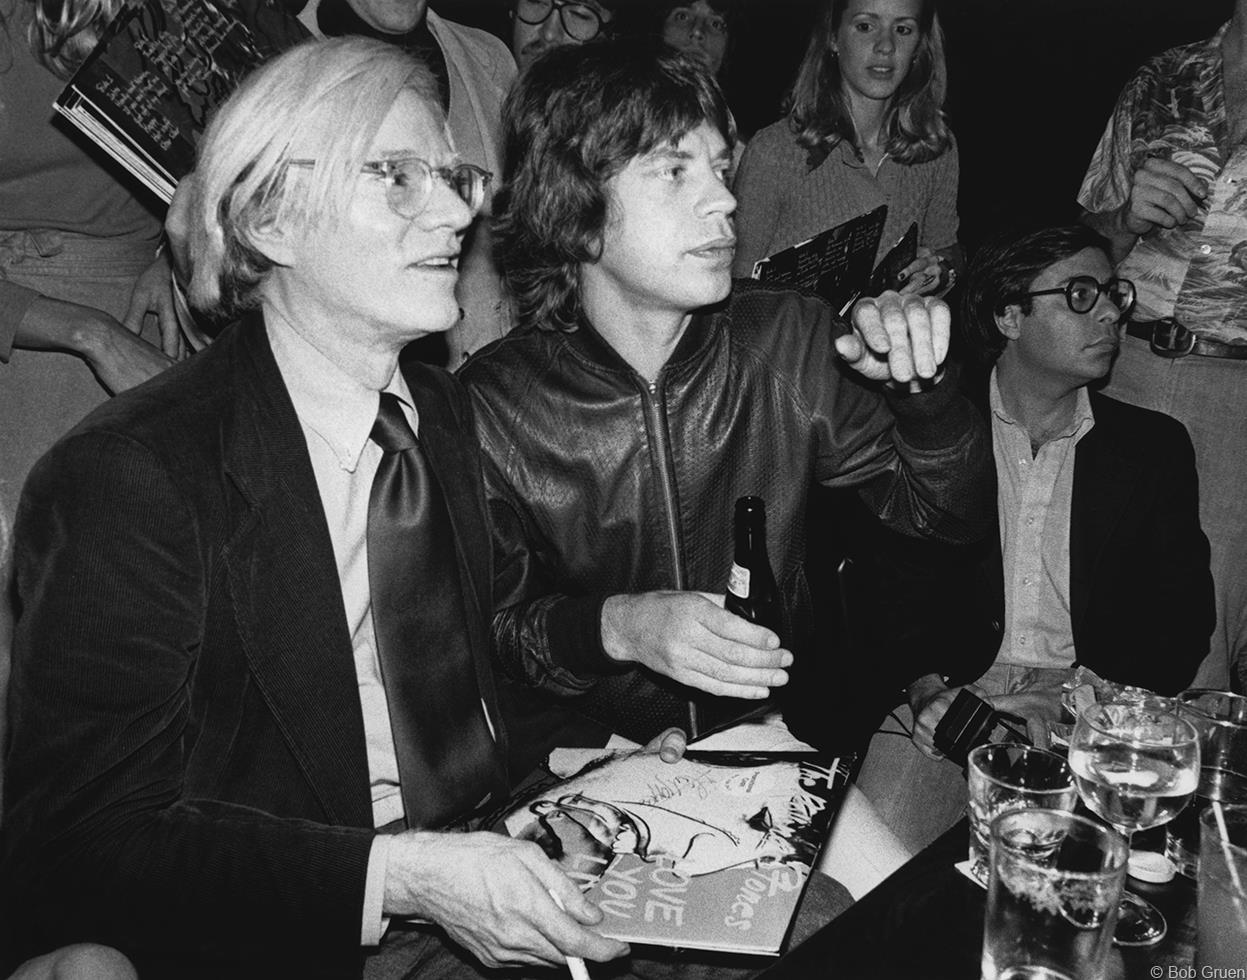 Bob Gruen Portrait Photograph - Andy Warhol & Mick Jagger, NYC 1977